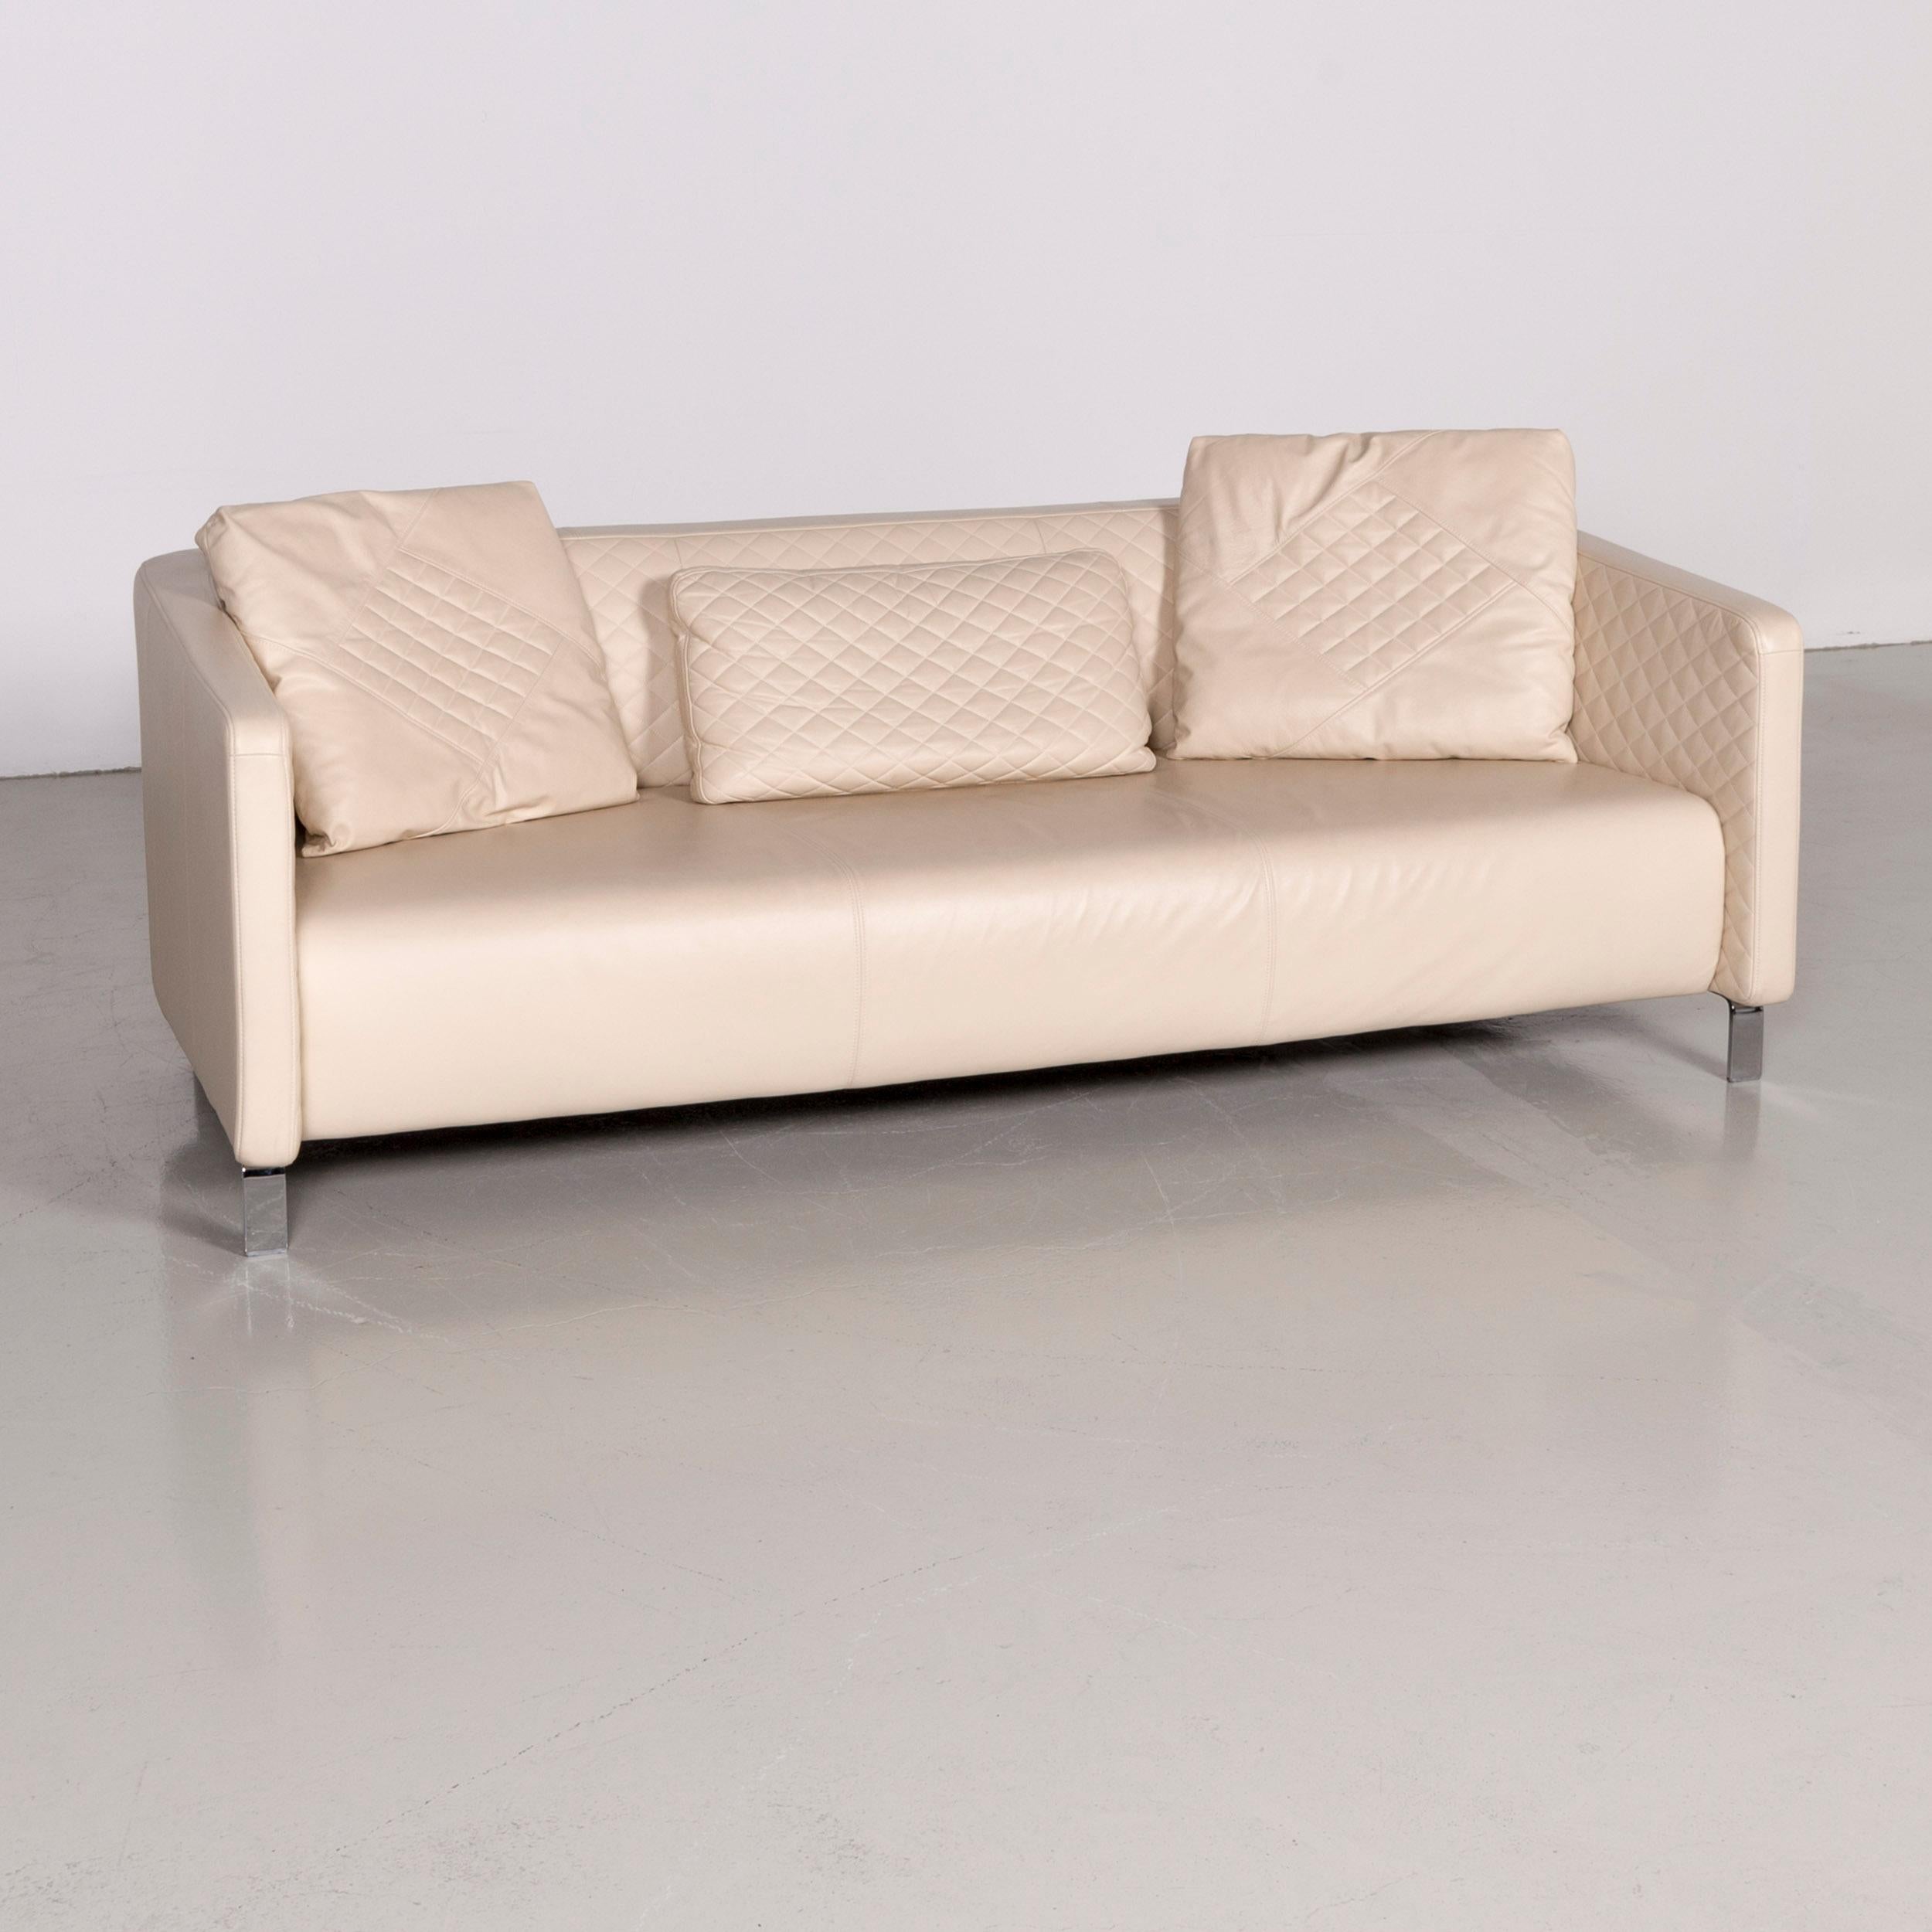 Rolf Benz 325 designer leather sofa beige three-seat couch.